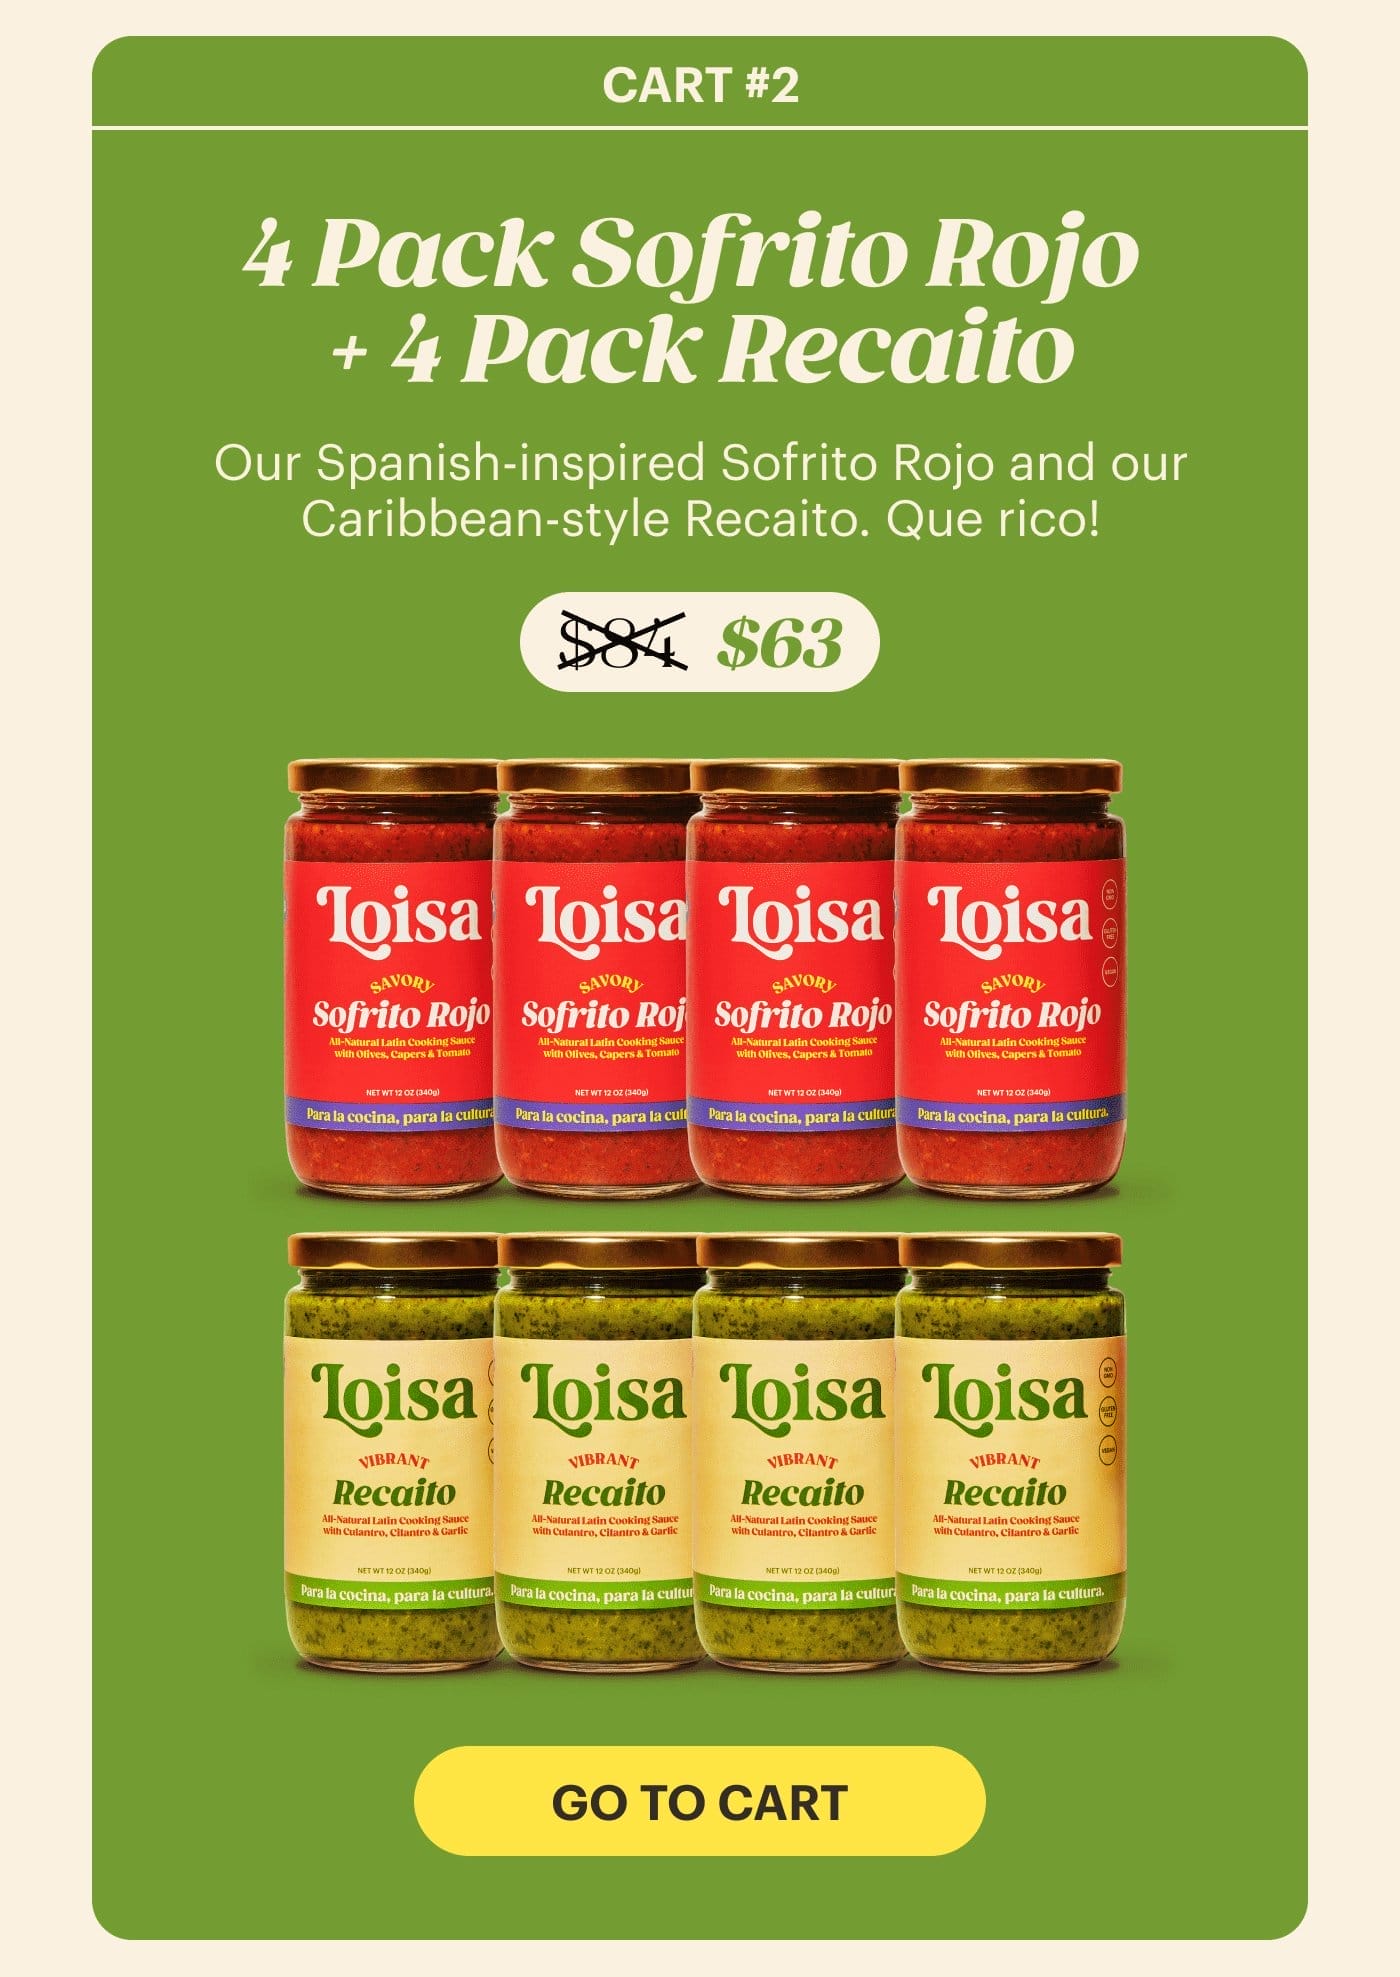 4 Pack Sofrito Rojo + 4 Pack Recaito (\\$84 \\$63) GO TO CART